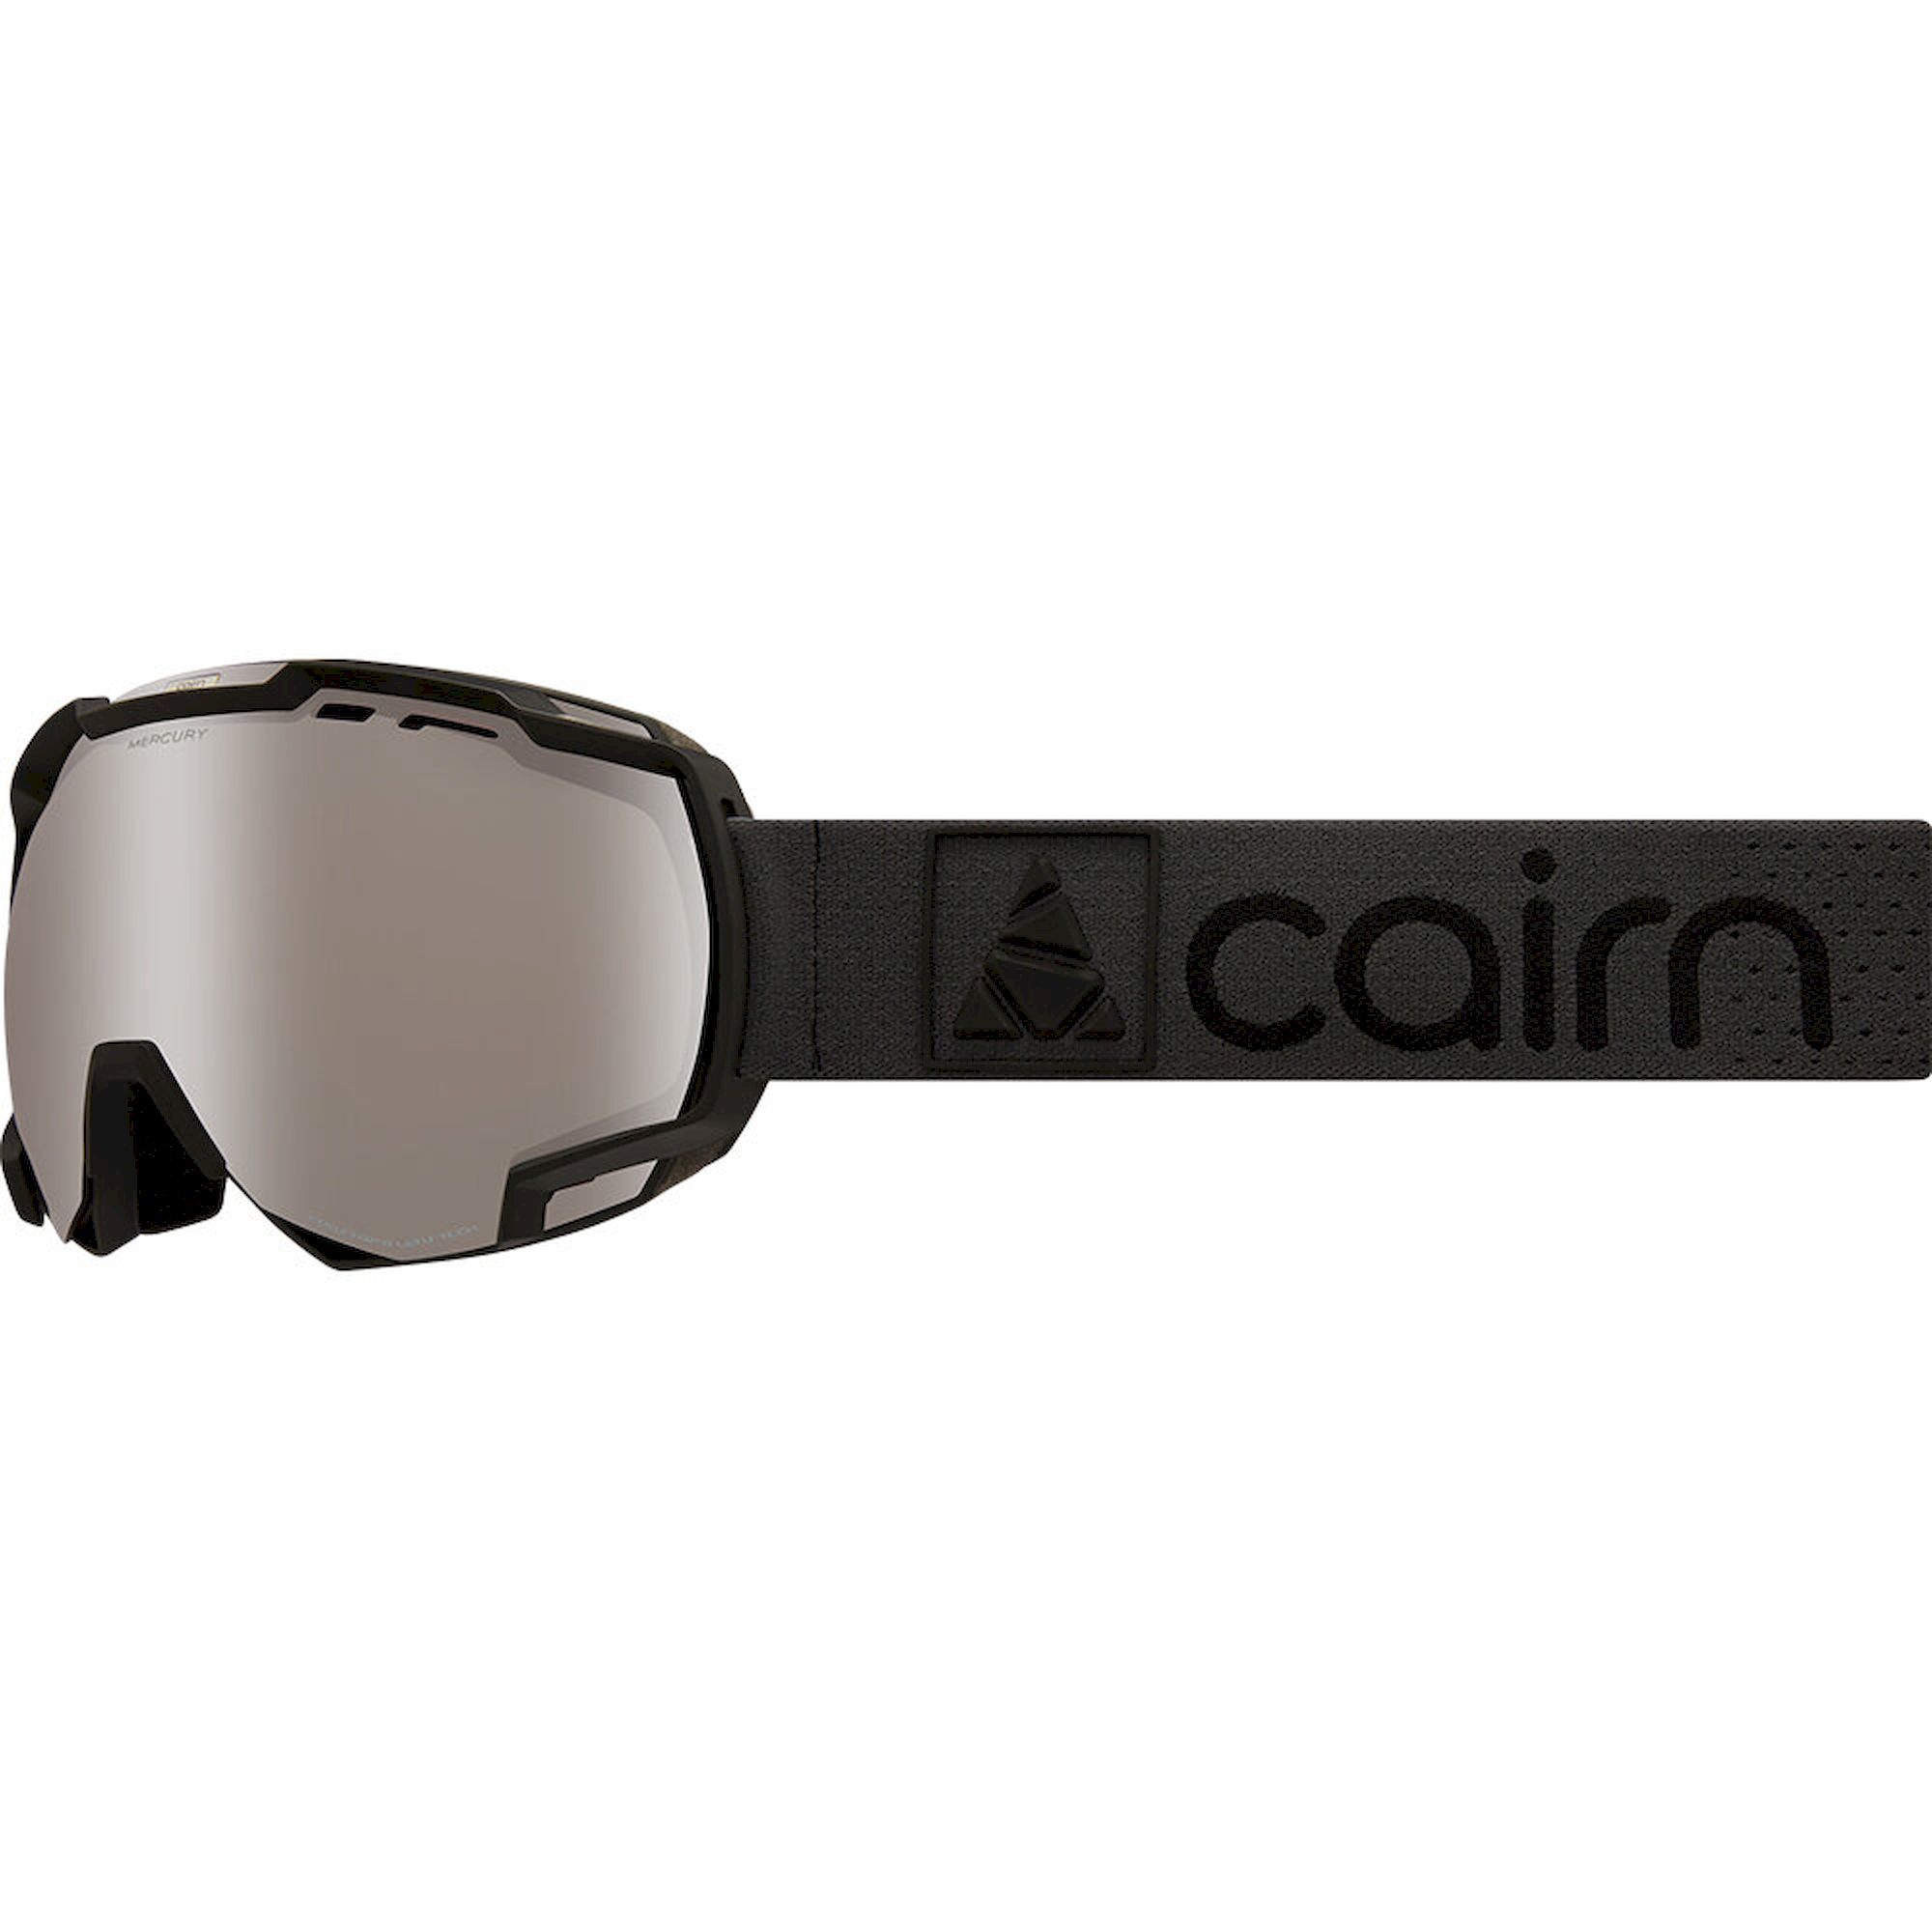 Cairn Mercury - Ski goggles